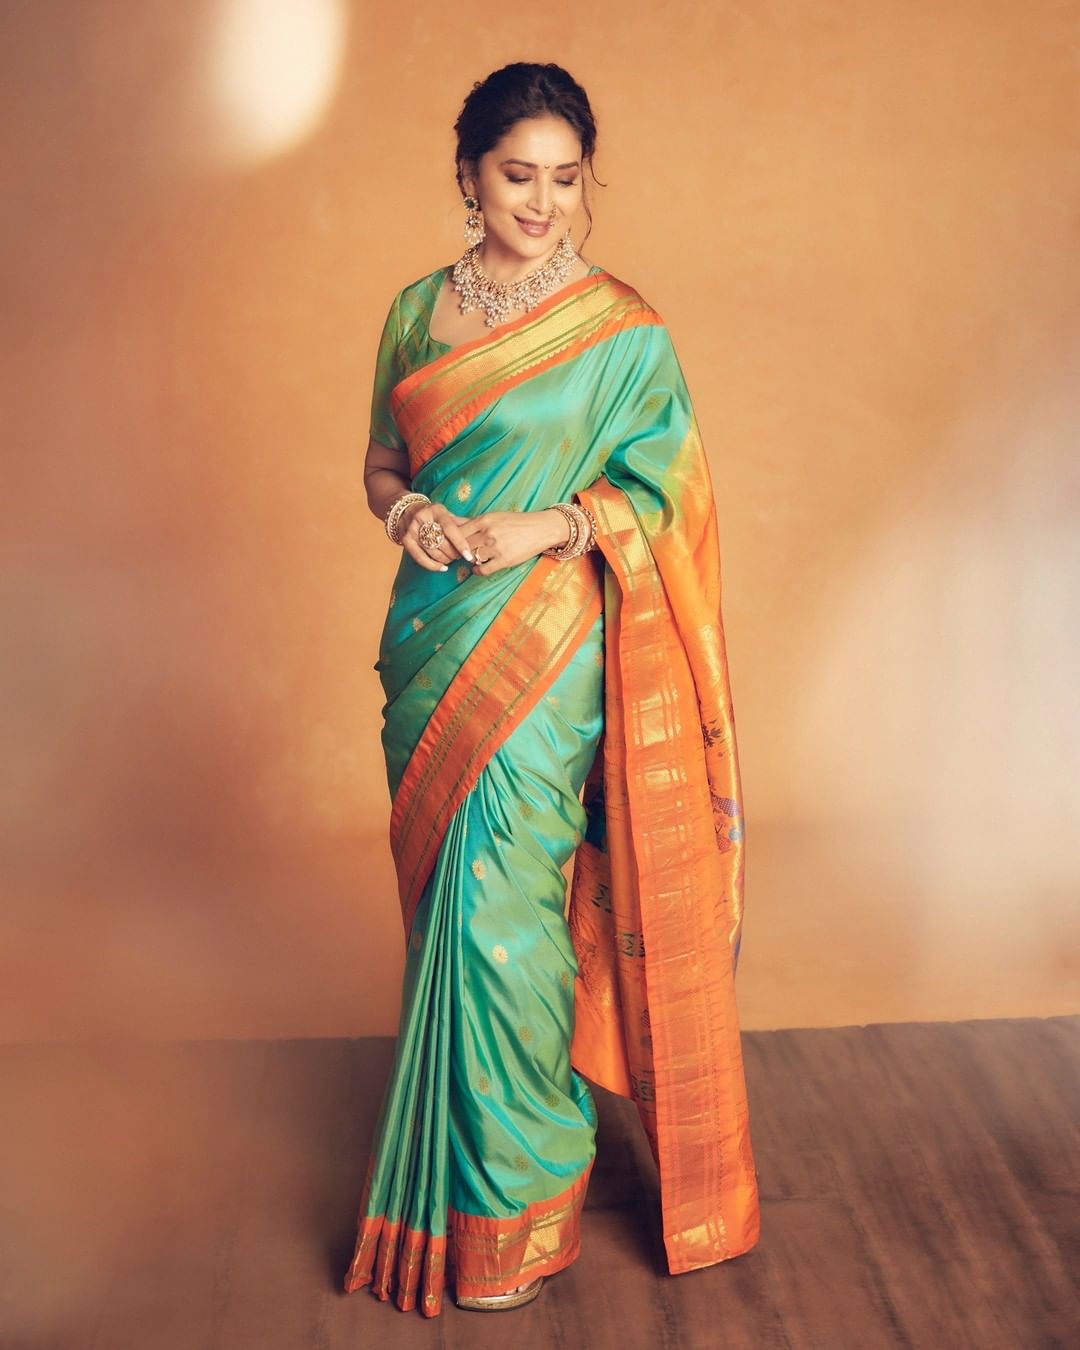 Madhuri DIxit's diwali look in Green silk saree